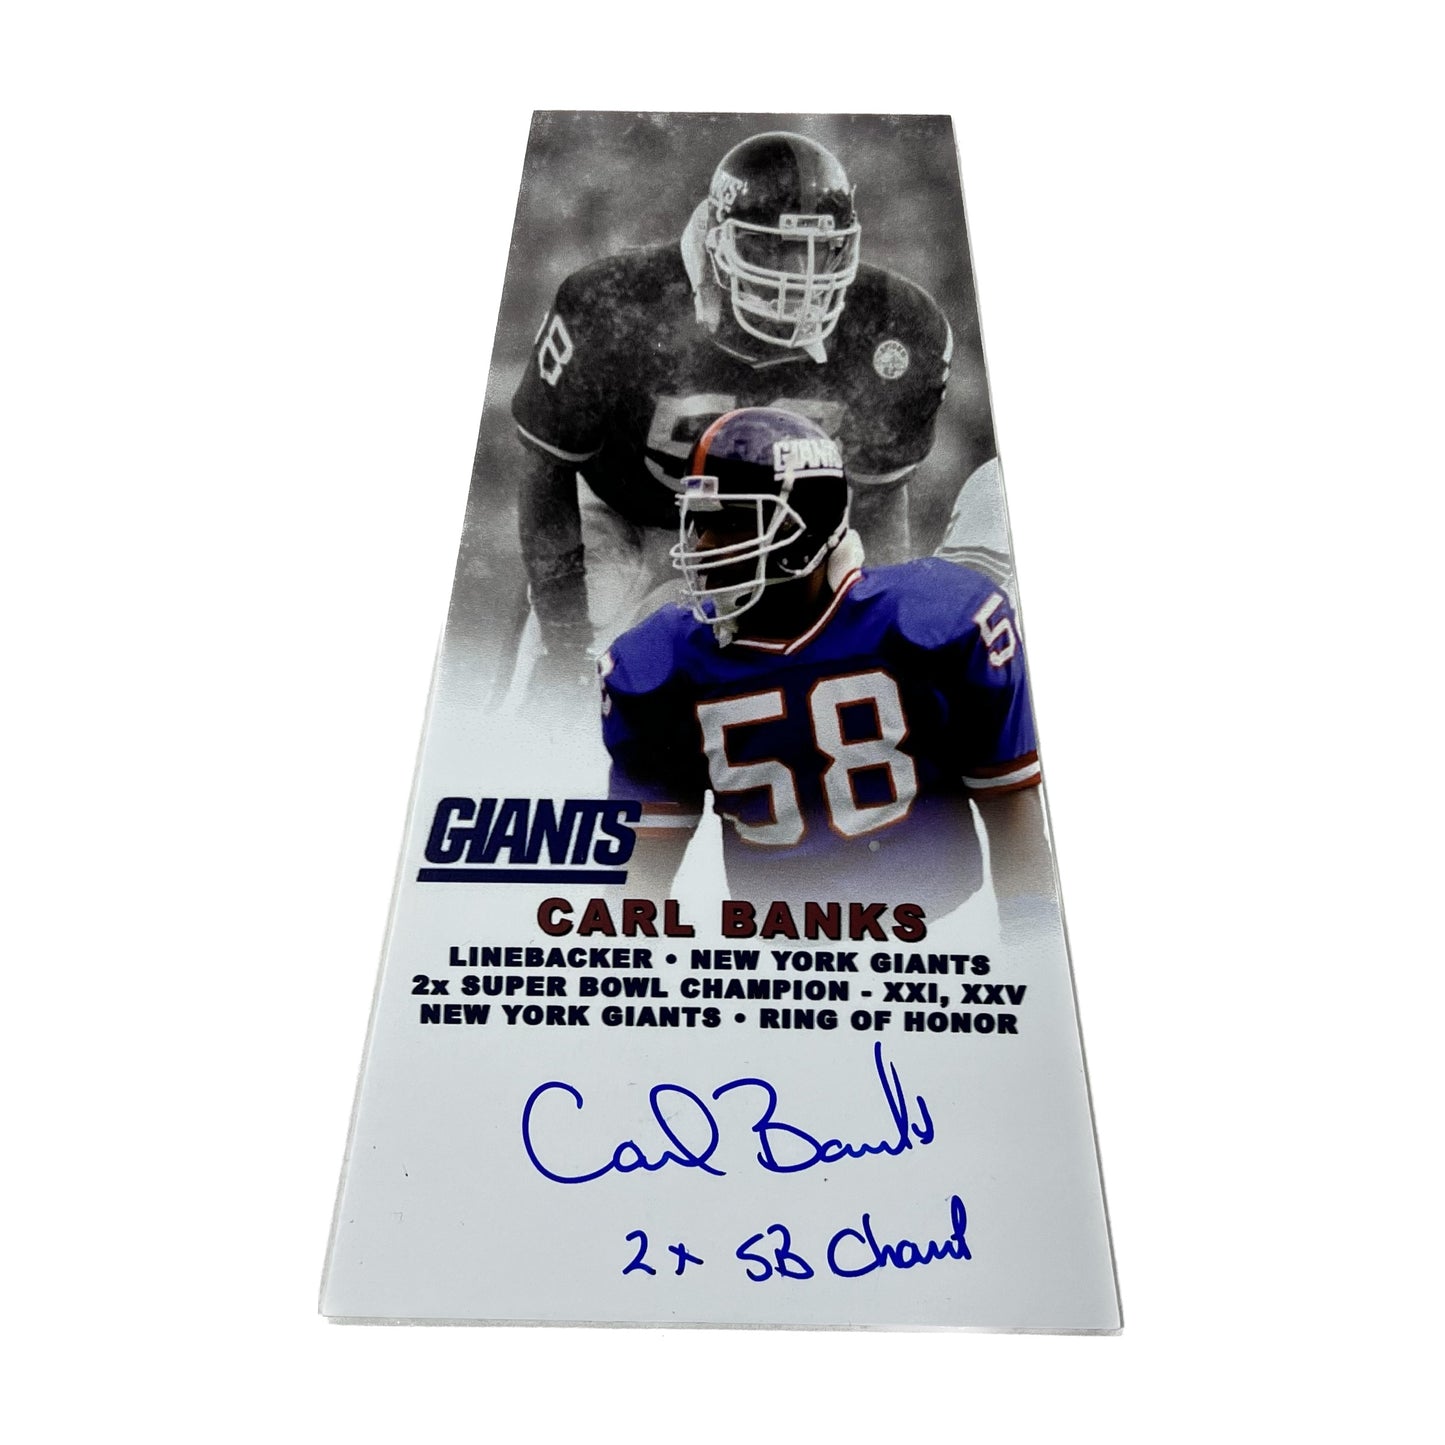 Carl Banks Autographed New York Giants Super Bowl Trophy Plaque